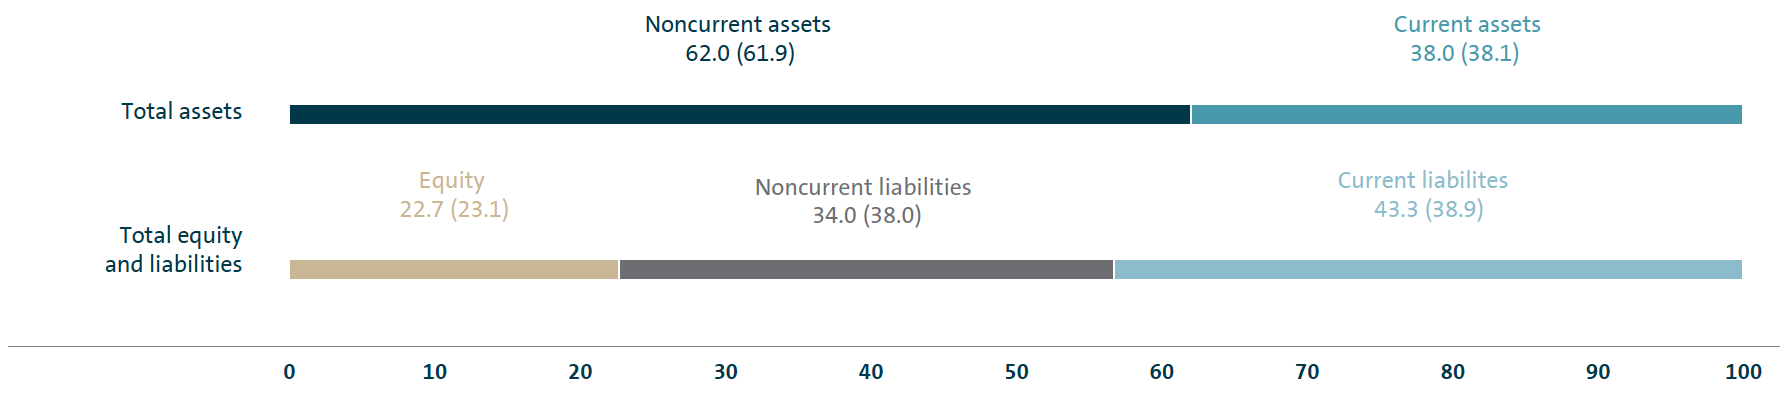 Consolidated balance sheet structure 2016 (bar chart)